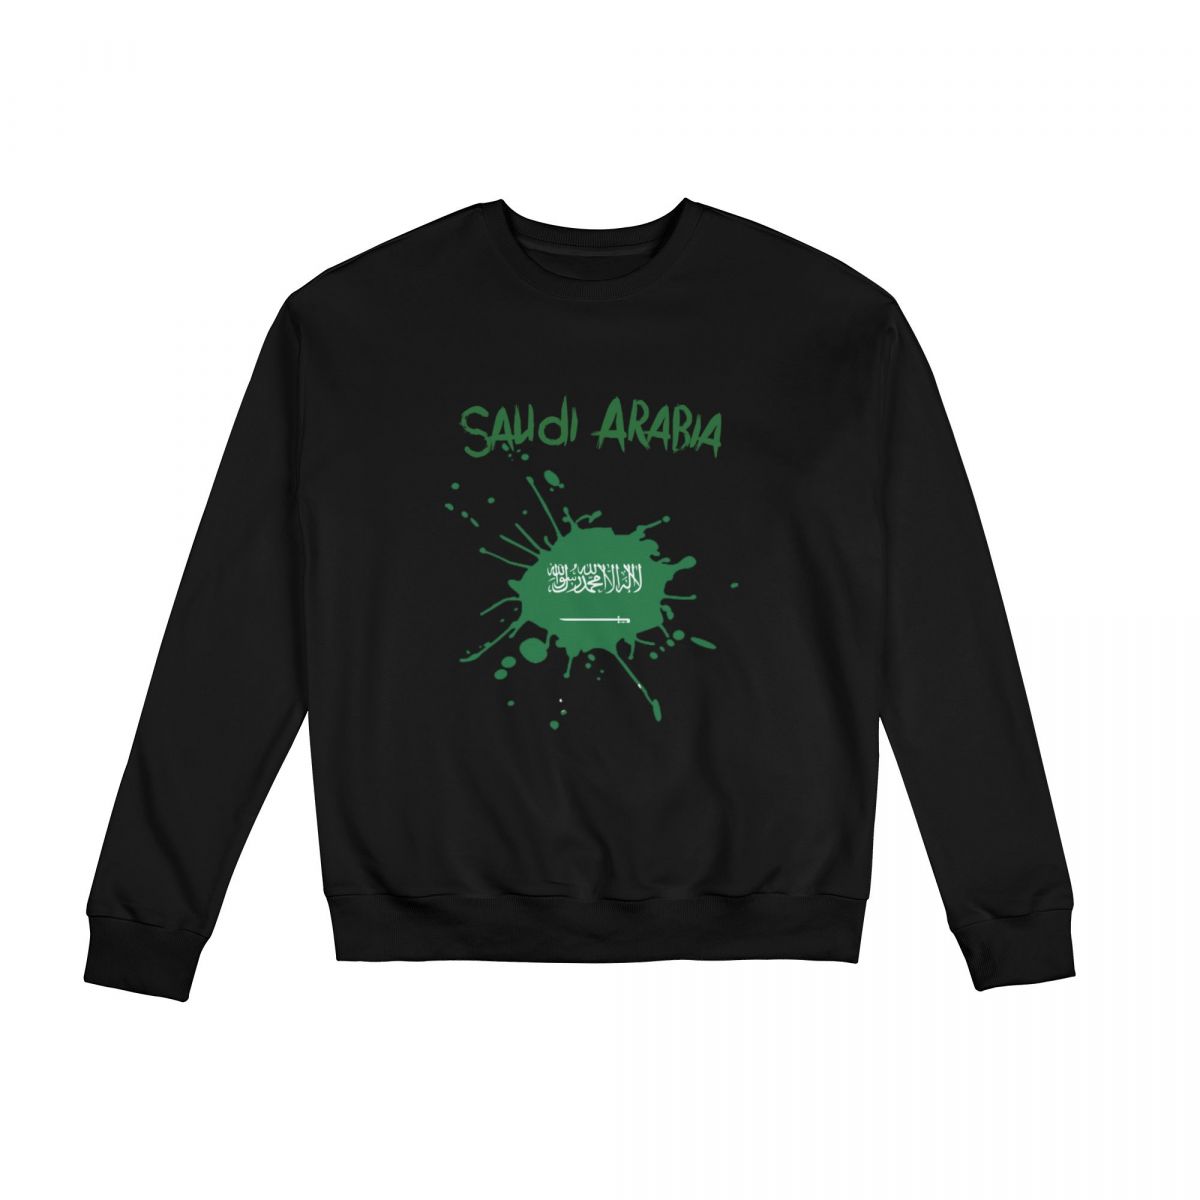 Saudi Arabia Ink Spatter Long Sleeve Sweatshirt